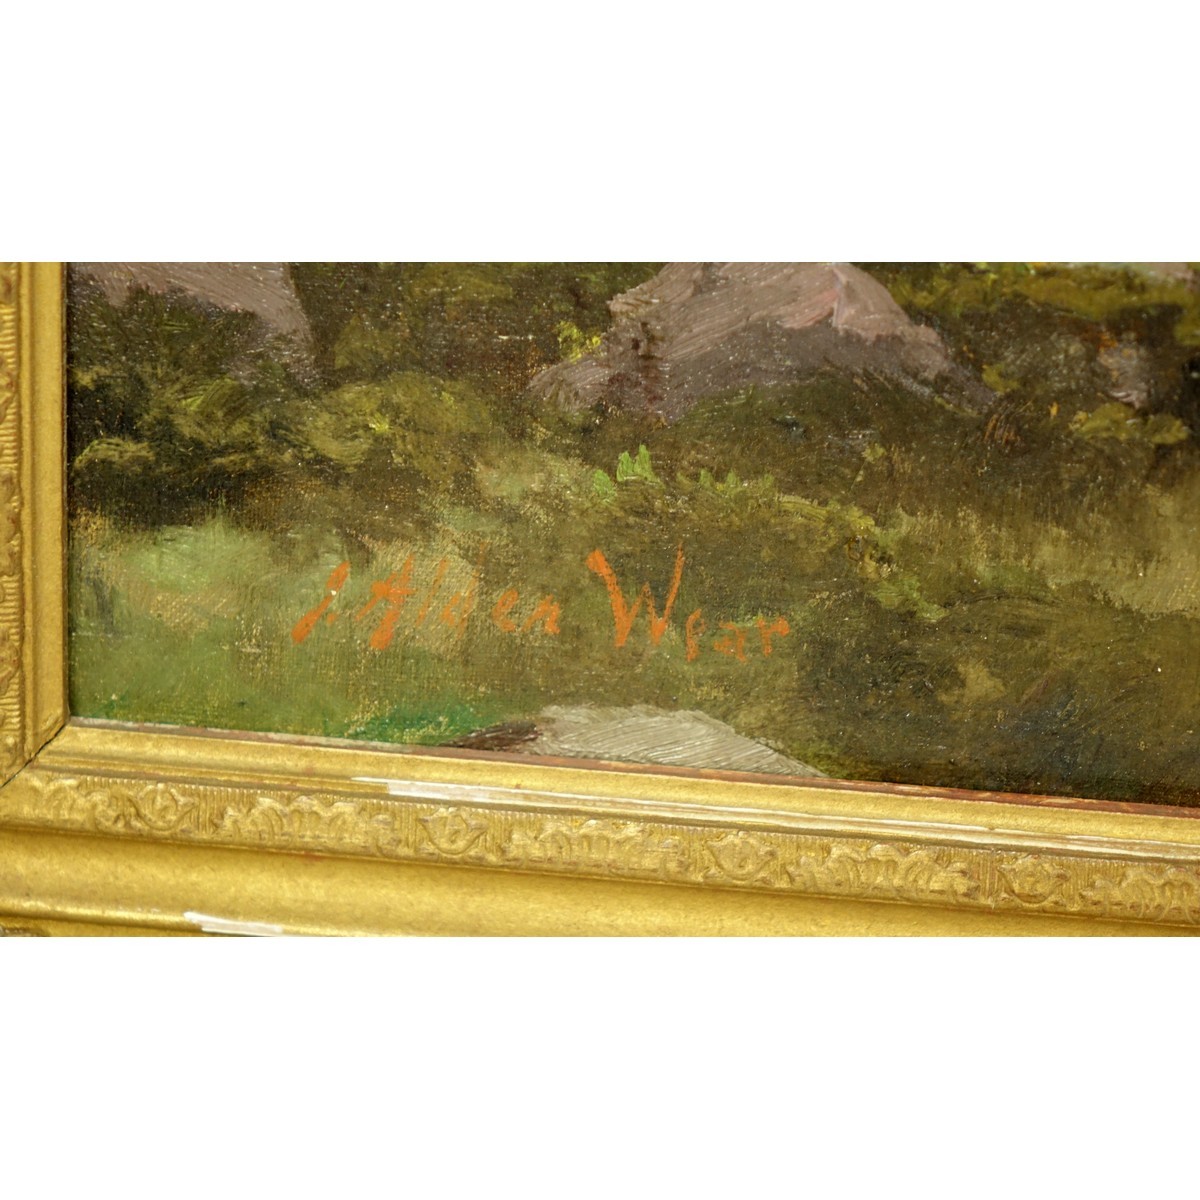 Antique Oil on Canvas, Pastoral Scene, Signed Lower J Alden Wear. Craquelure. Measures 14-1/2" H x 